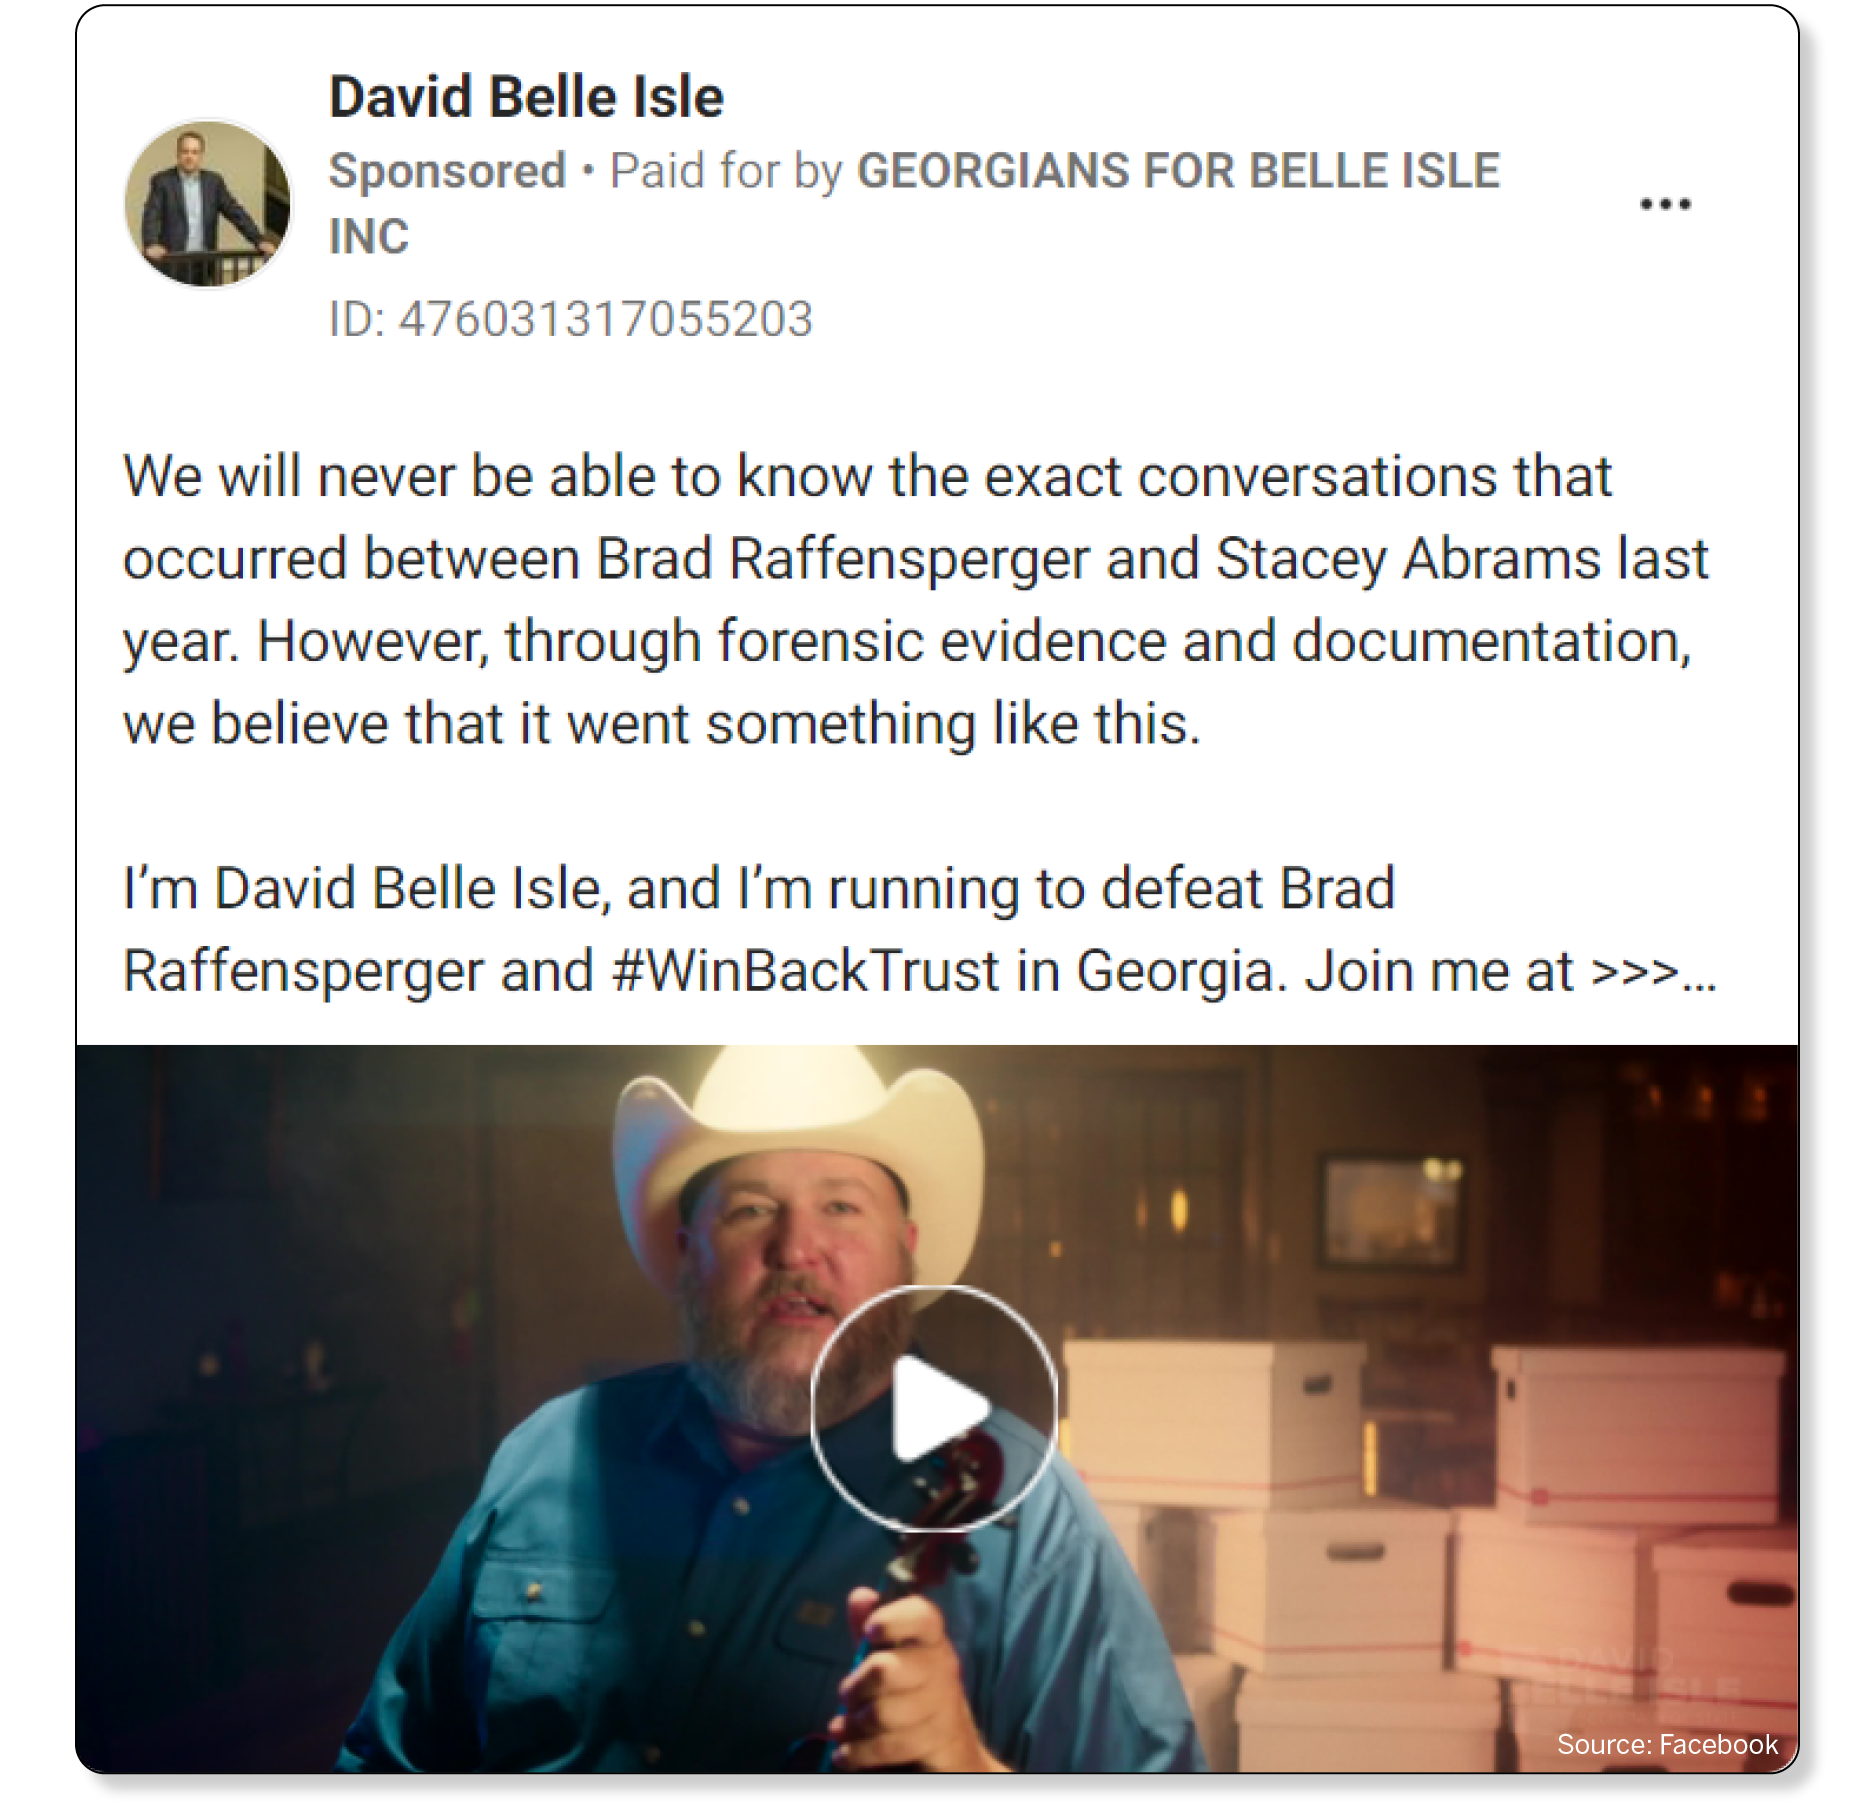 Screenshot of David Belle Isle Facebook ad